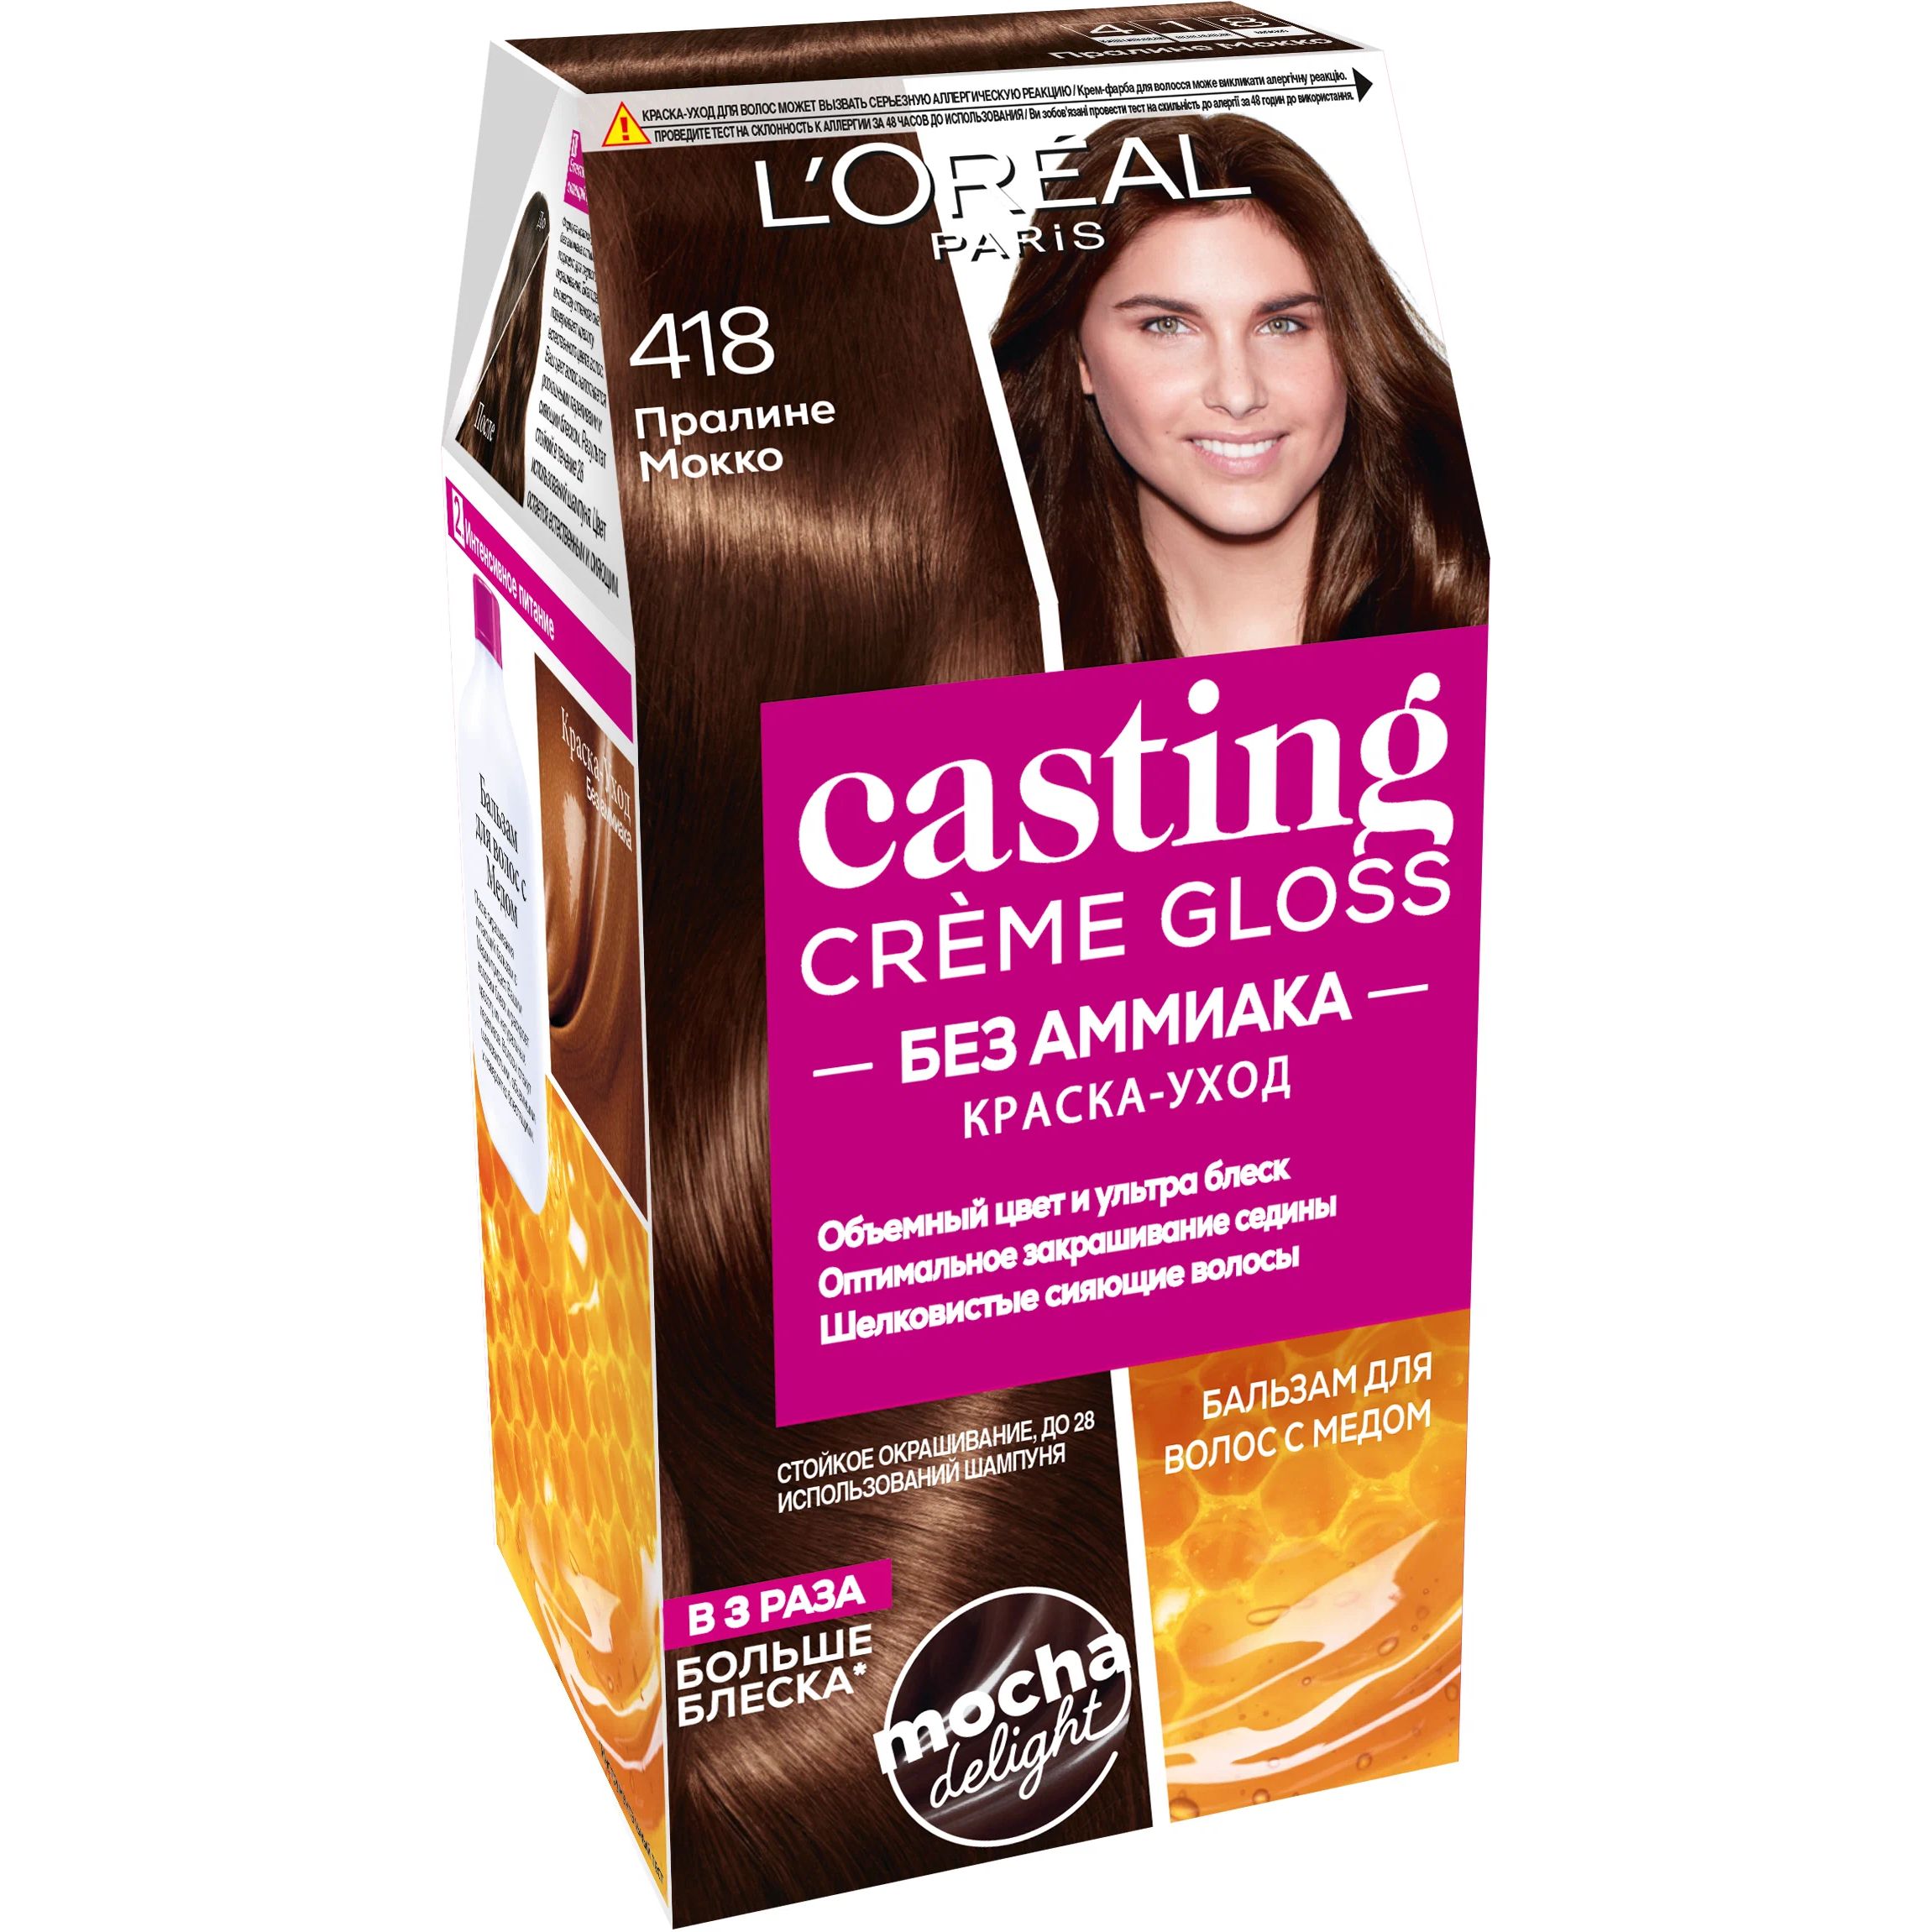 Краска-уход для волос L'Oreal Paris Casting Creme Gloss пралине мокко, №418, 239 мл